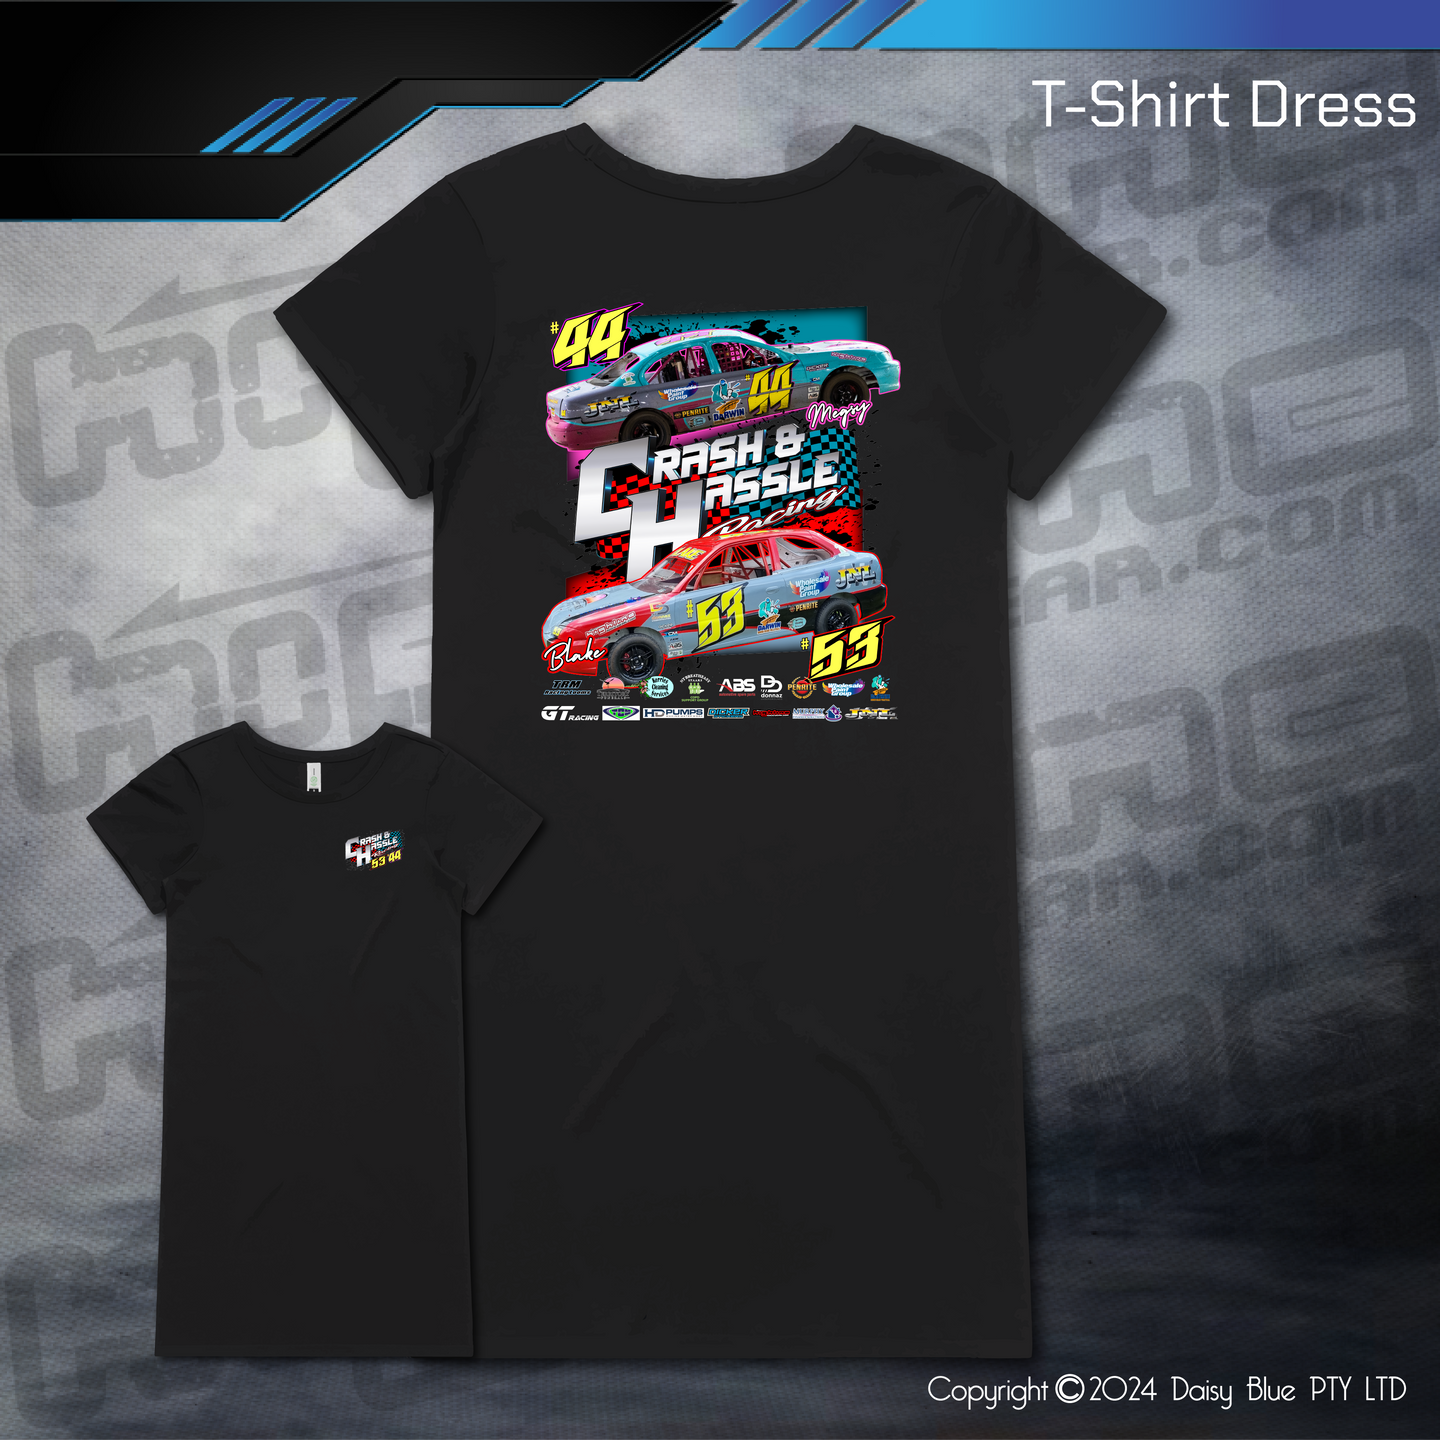 T-Shirt Dress - Crash N Hassle Racing